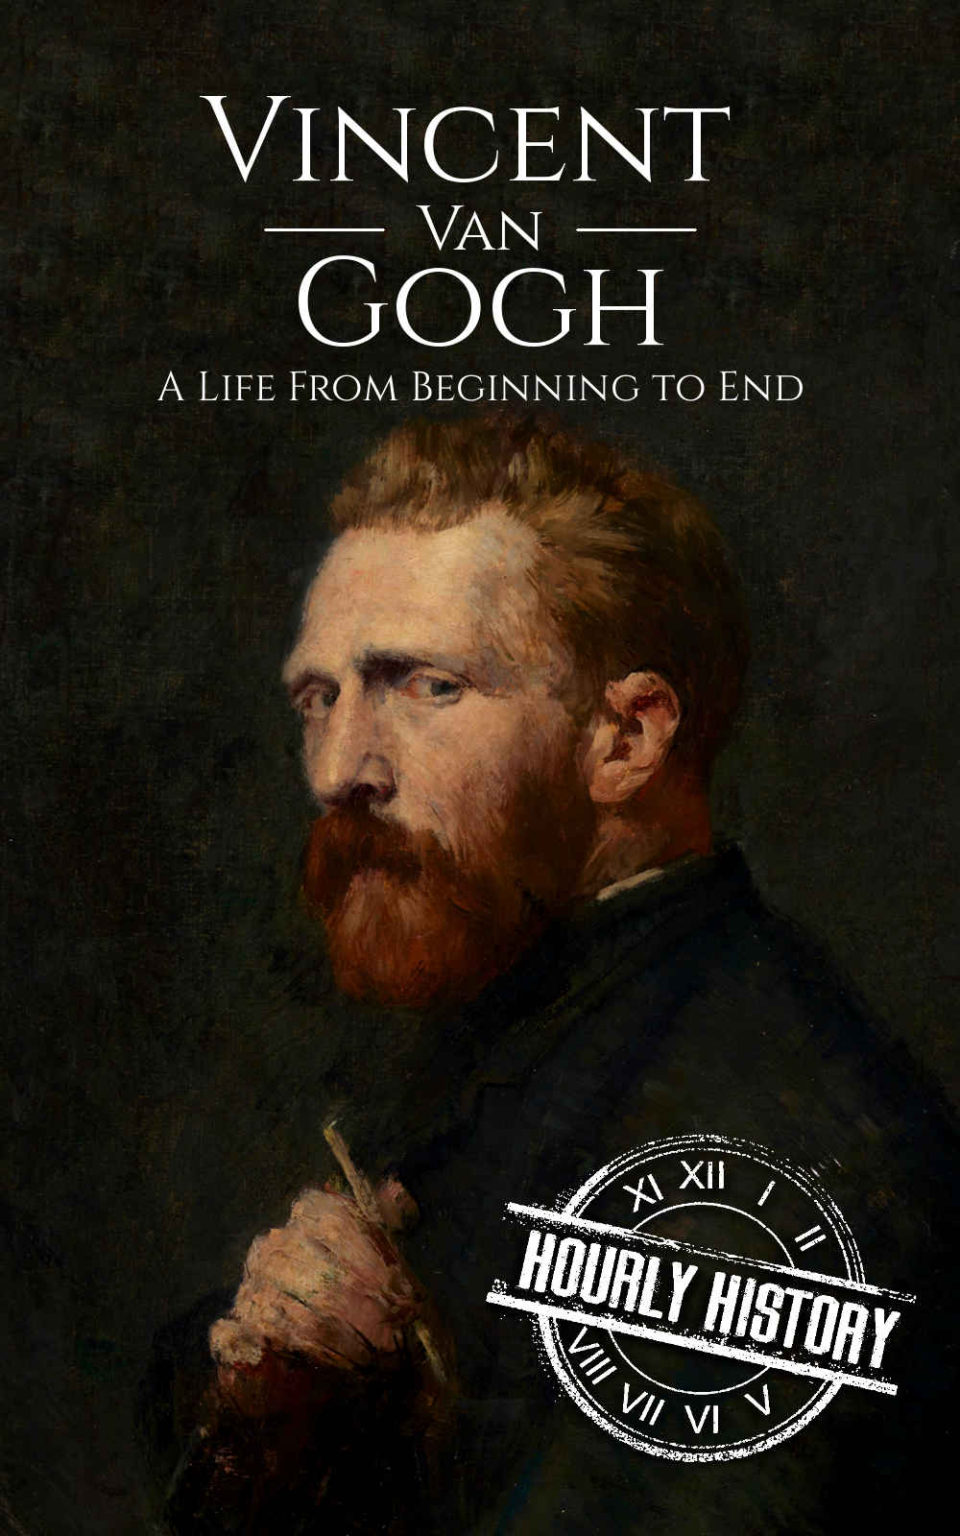 brief biography of vincent van gogh